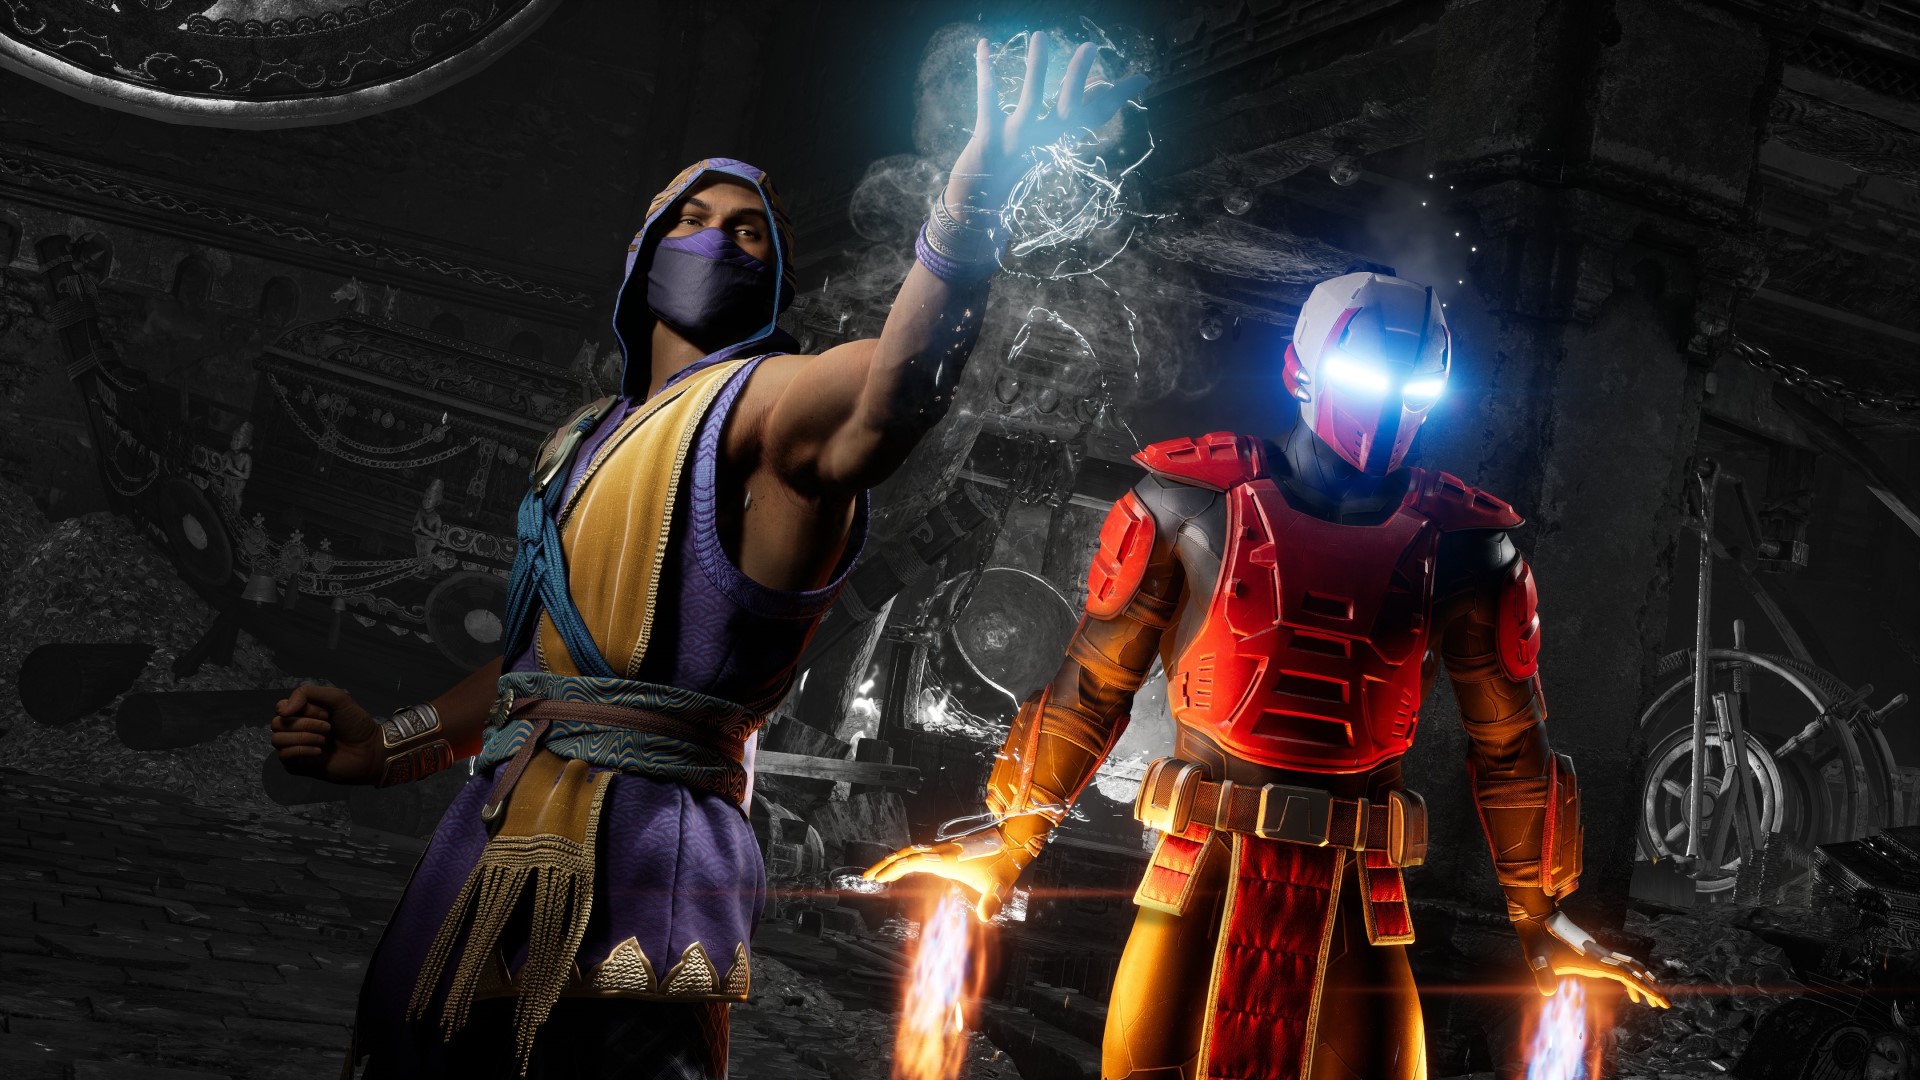 Mortal Kombat DLC leak confirms Invincible's Omni-Man, Homelander